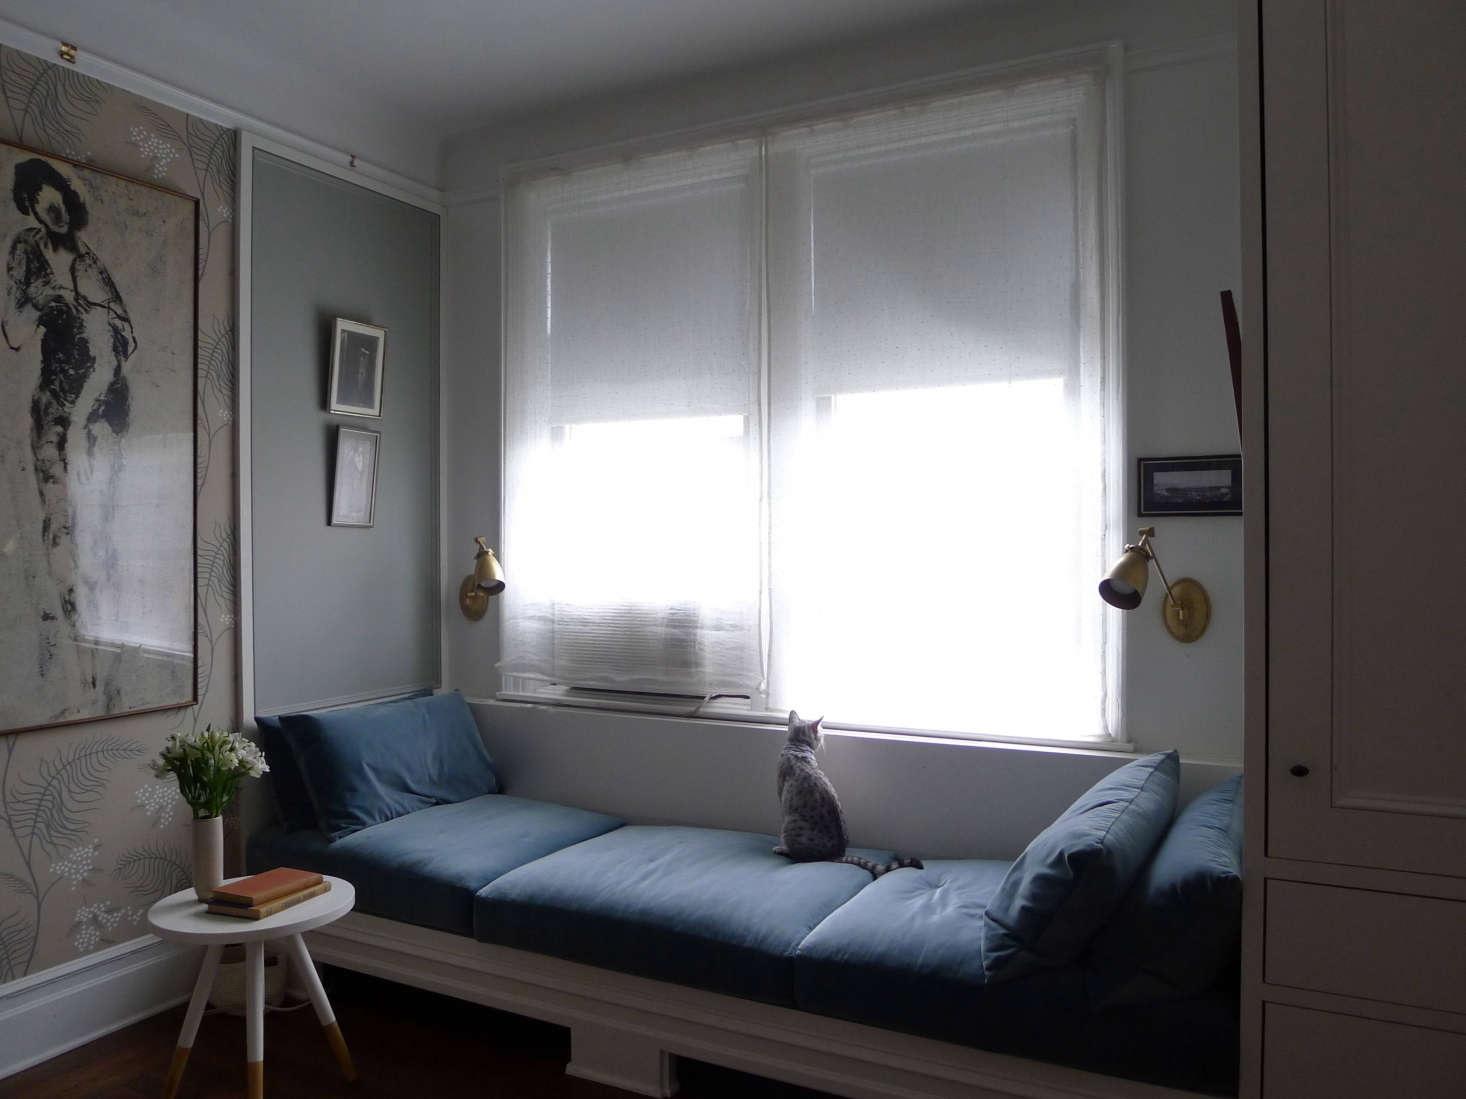 h new york prewar apartment master bedroom renovation lead photo 1